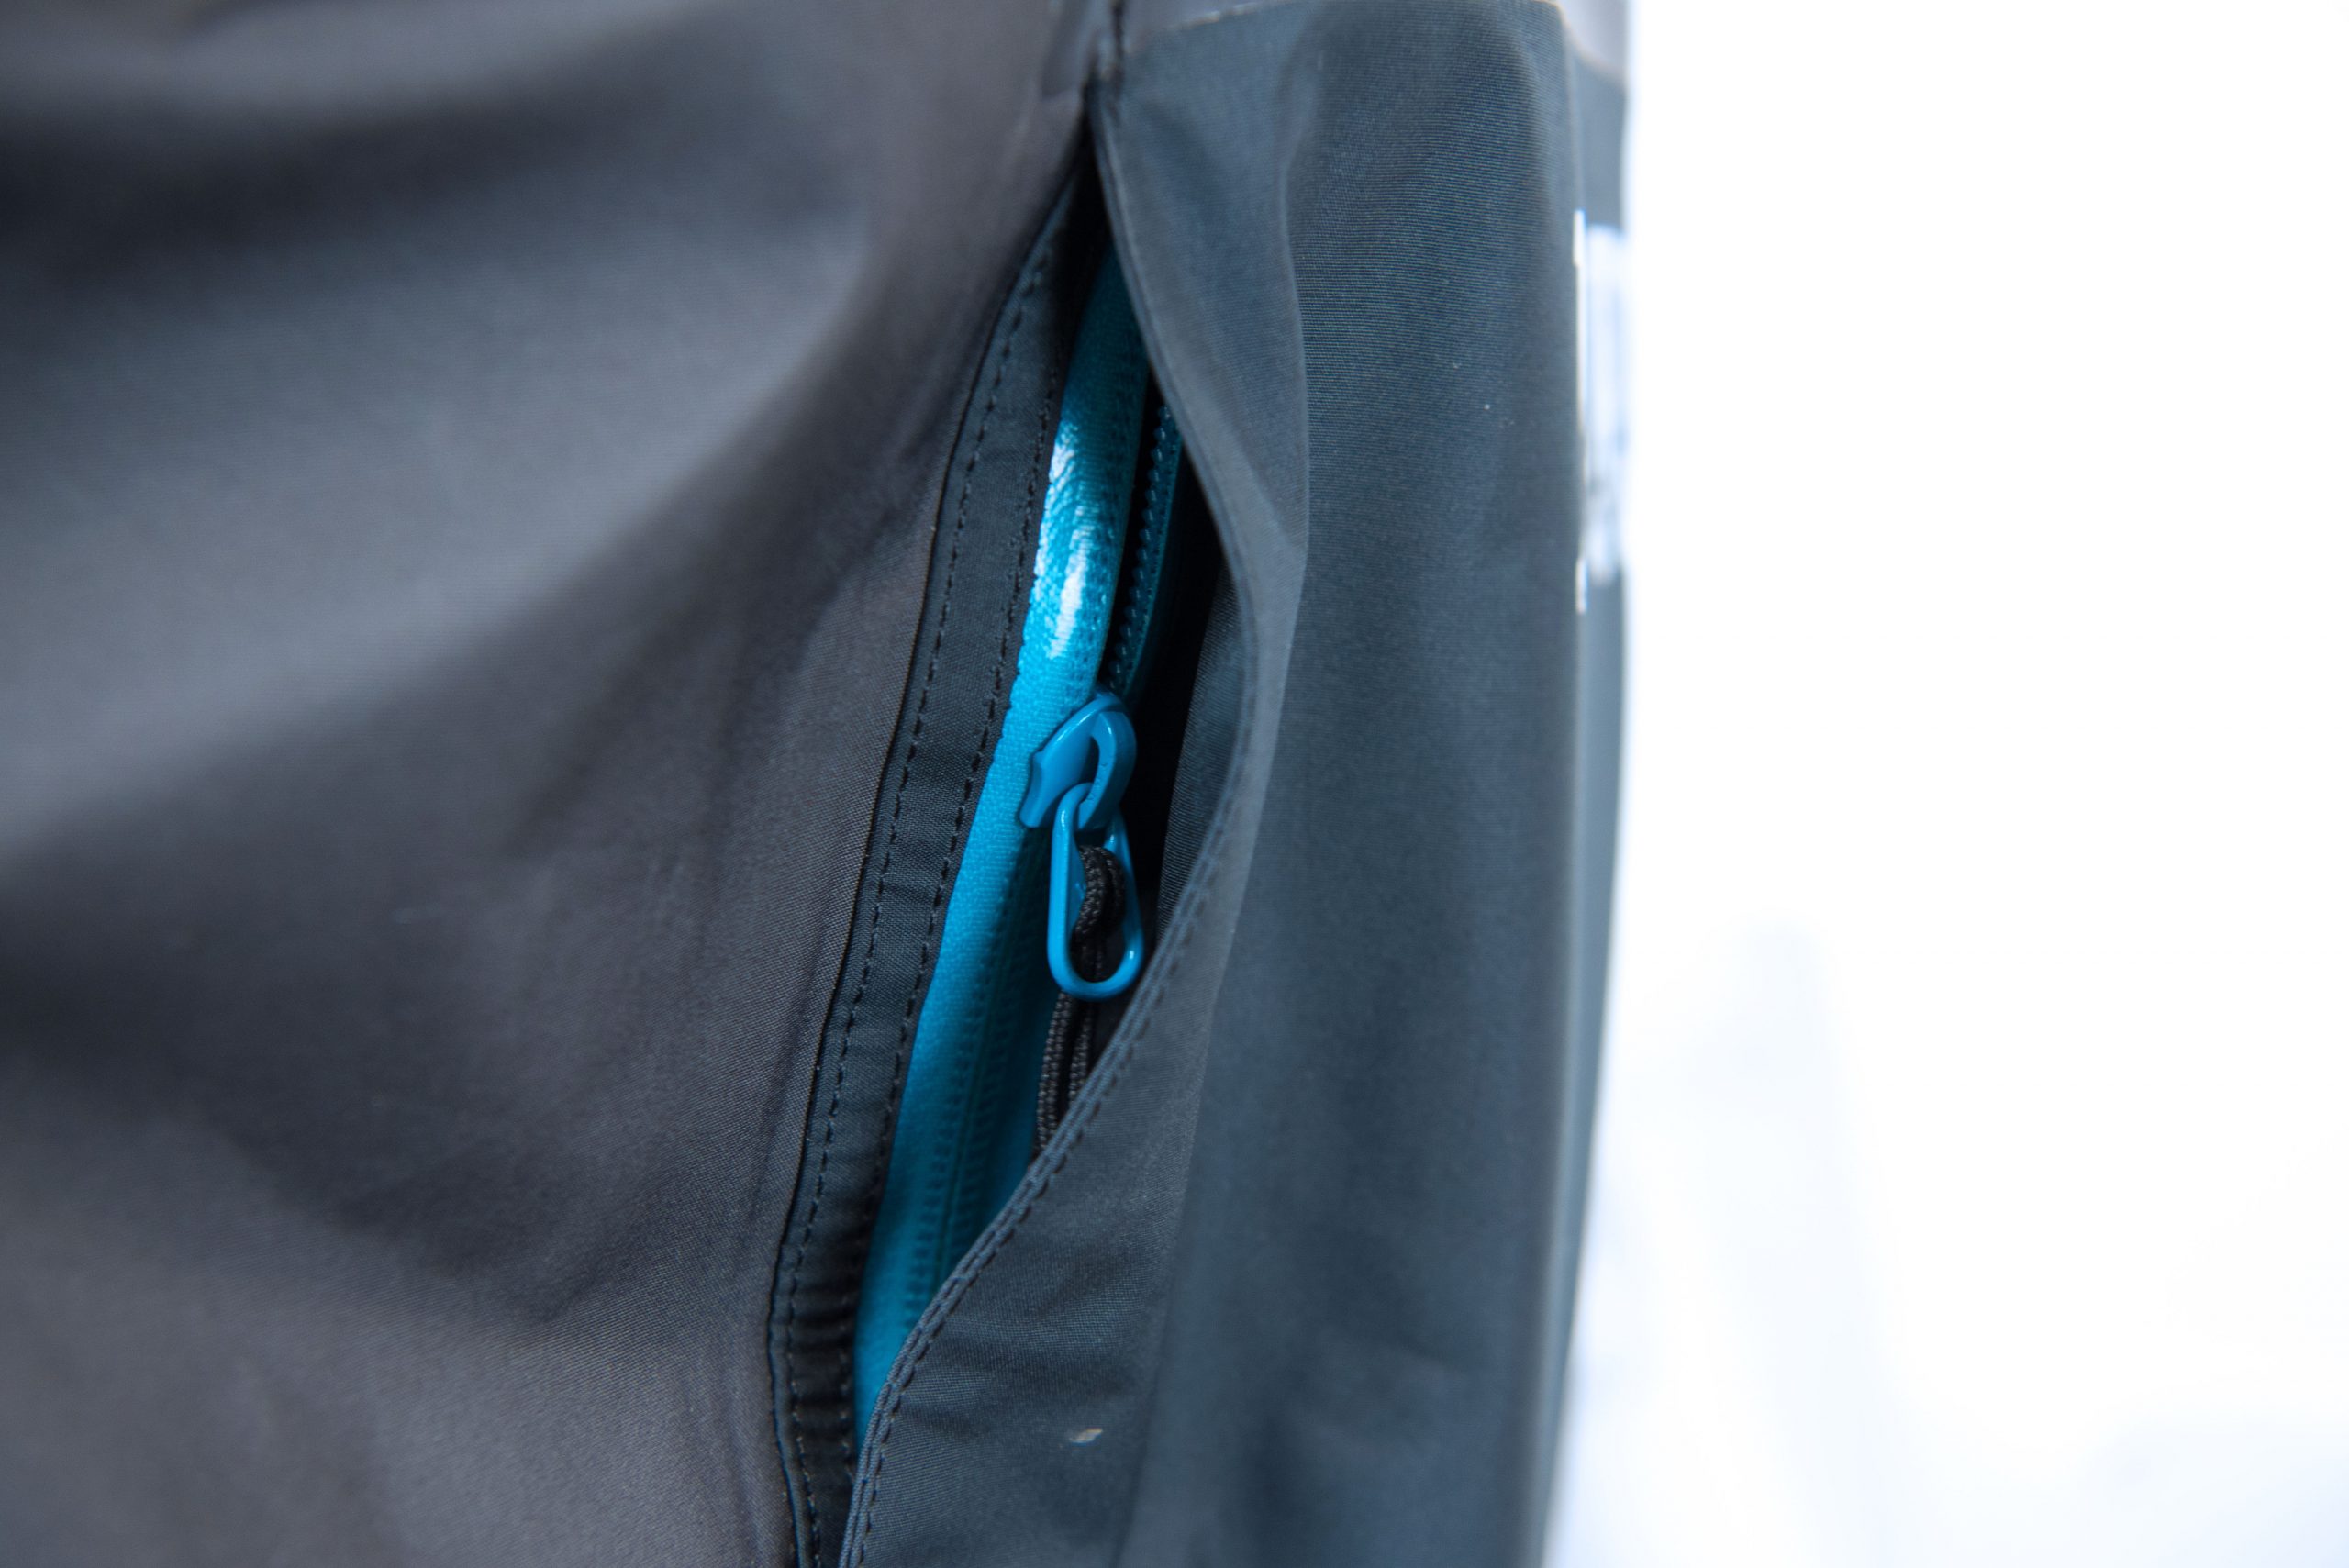 DRYFT S14 wader hand warming pocket zipper